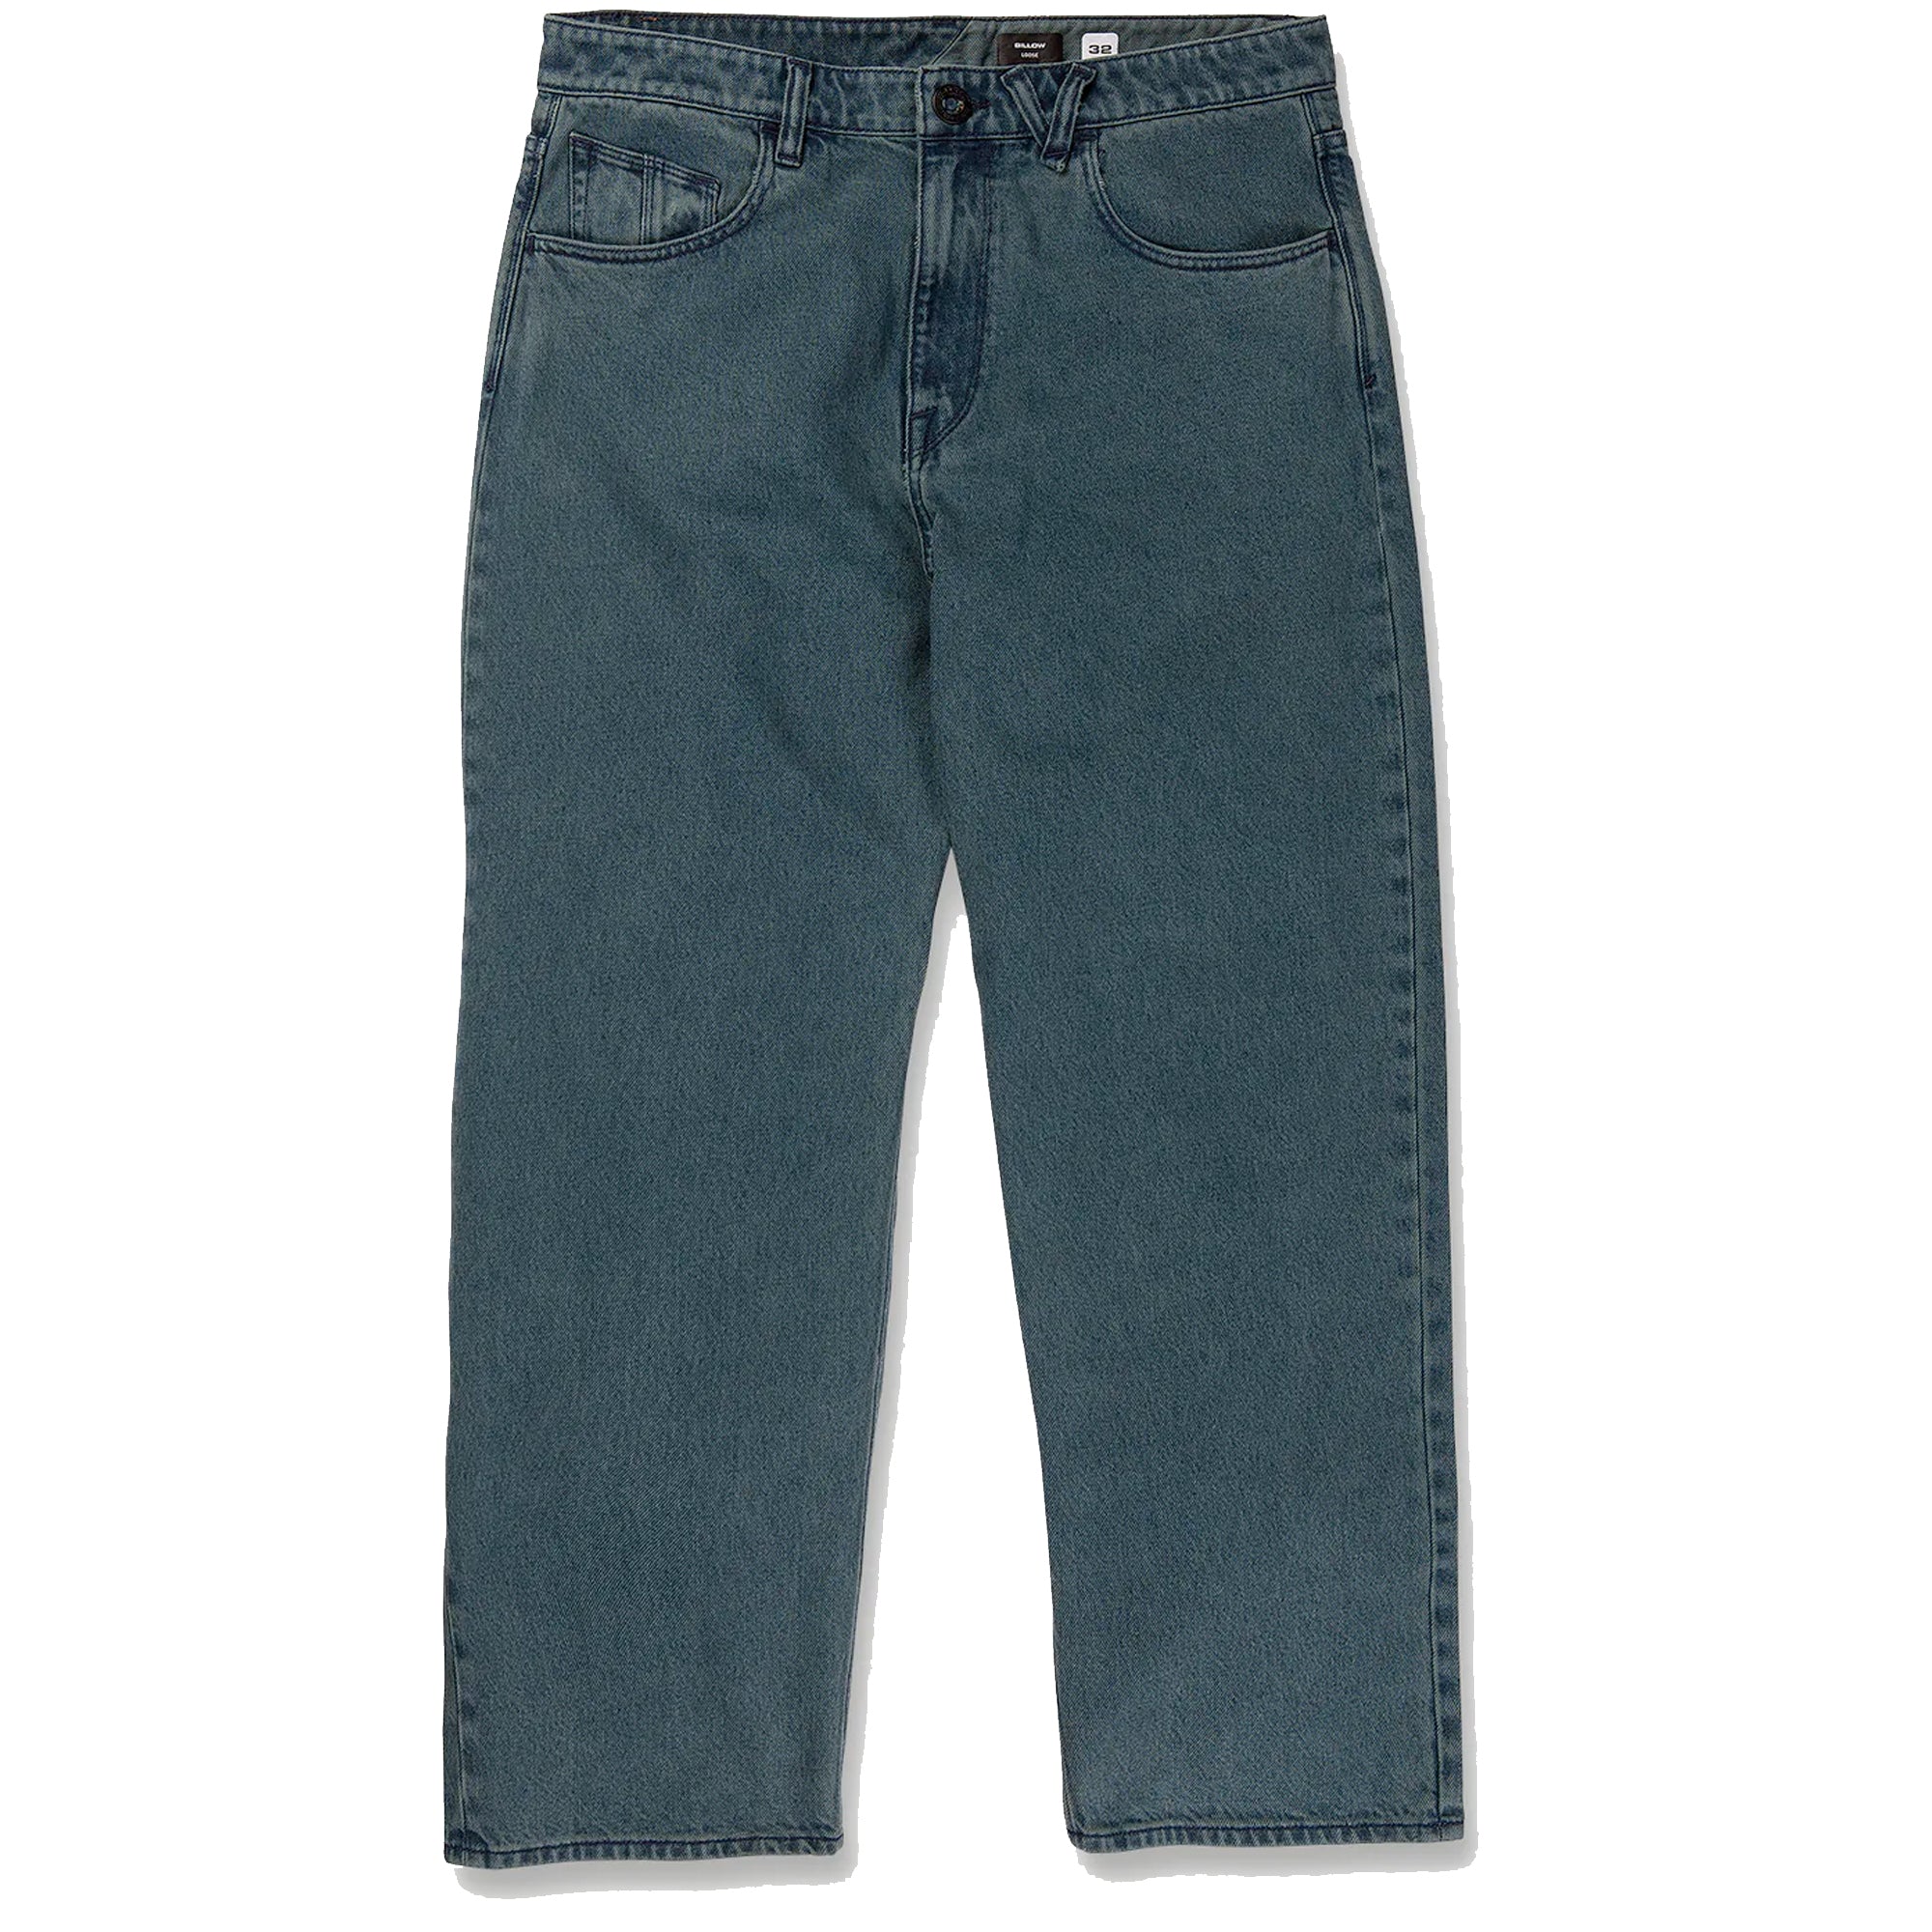 Volcom Billow Men's Jeans